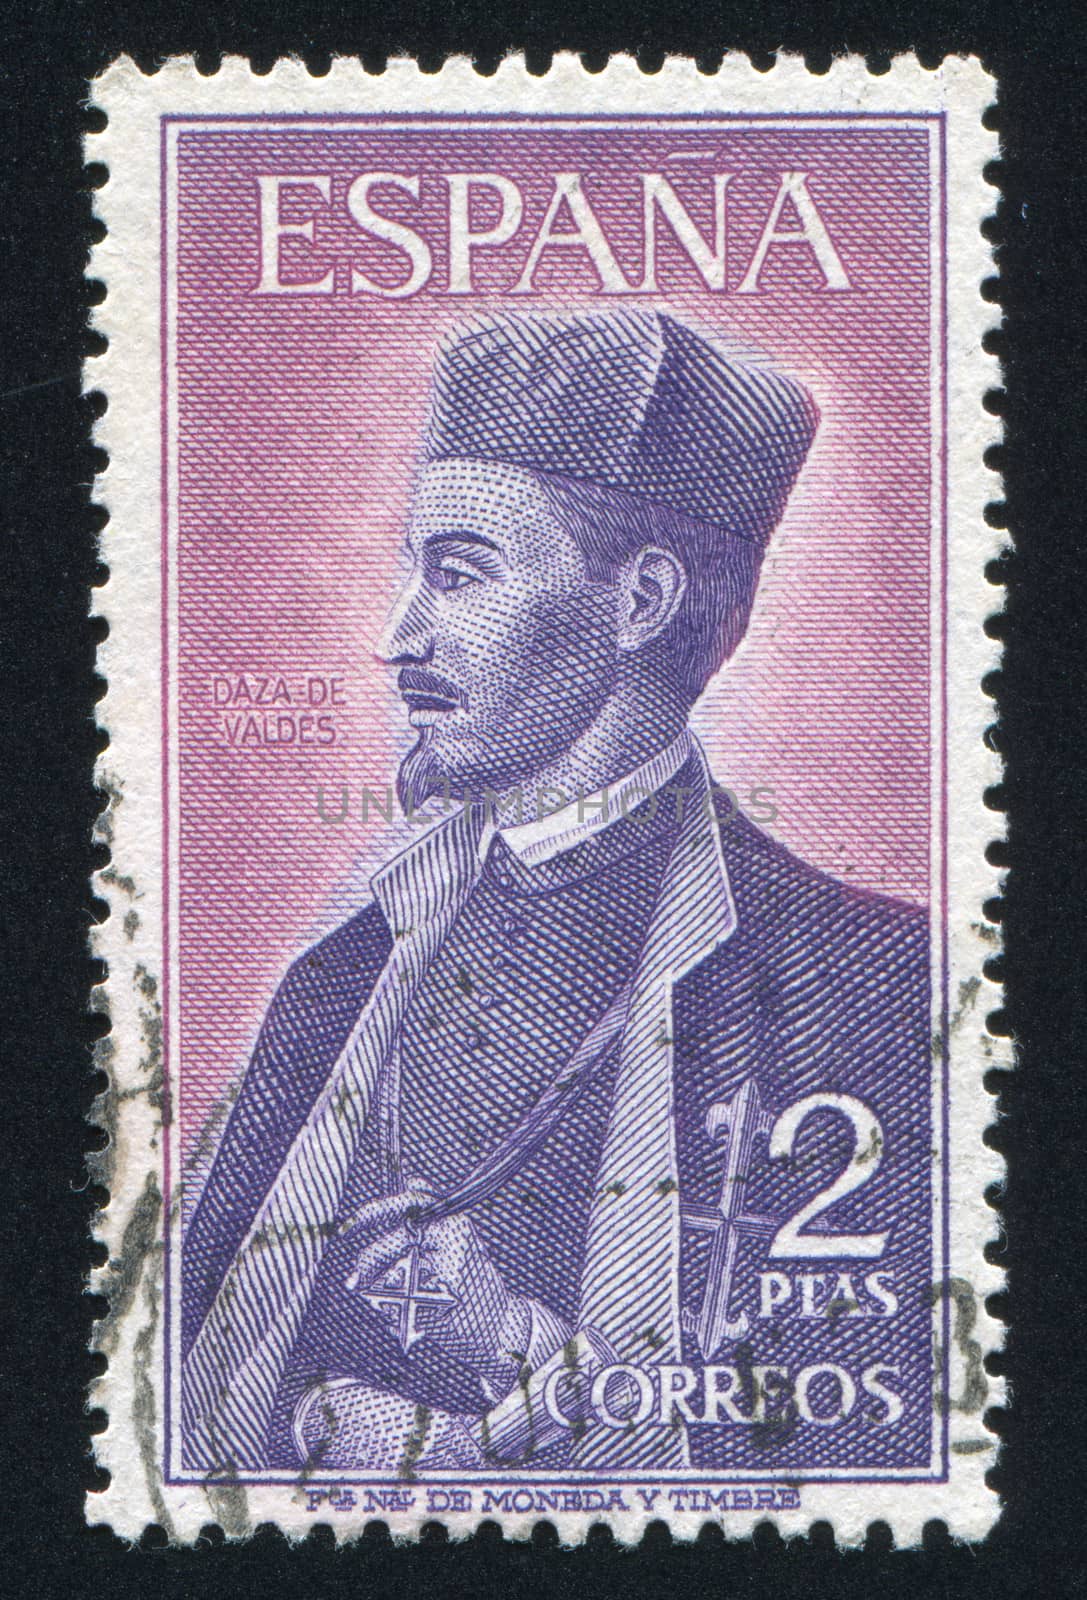 SPAIN - CIRCA 1966: stamp printed by Spain, shows Daza de Valdes, scientist, circa 1966